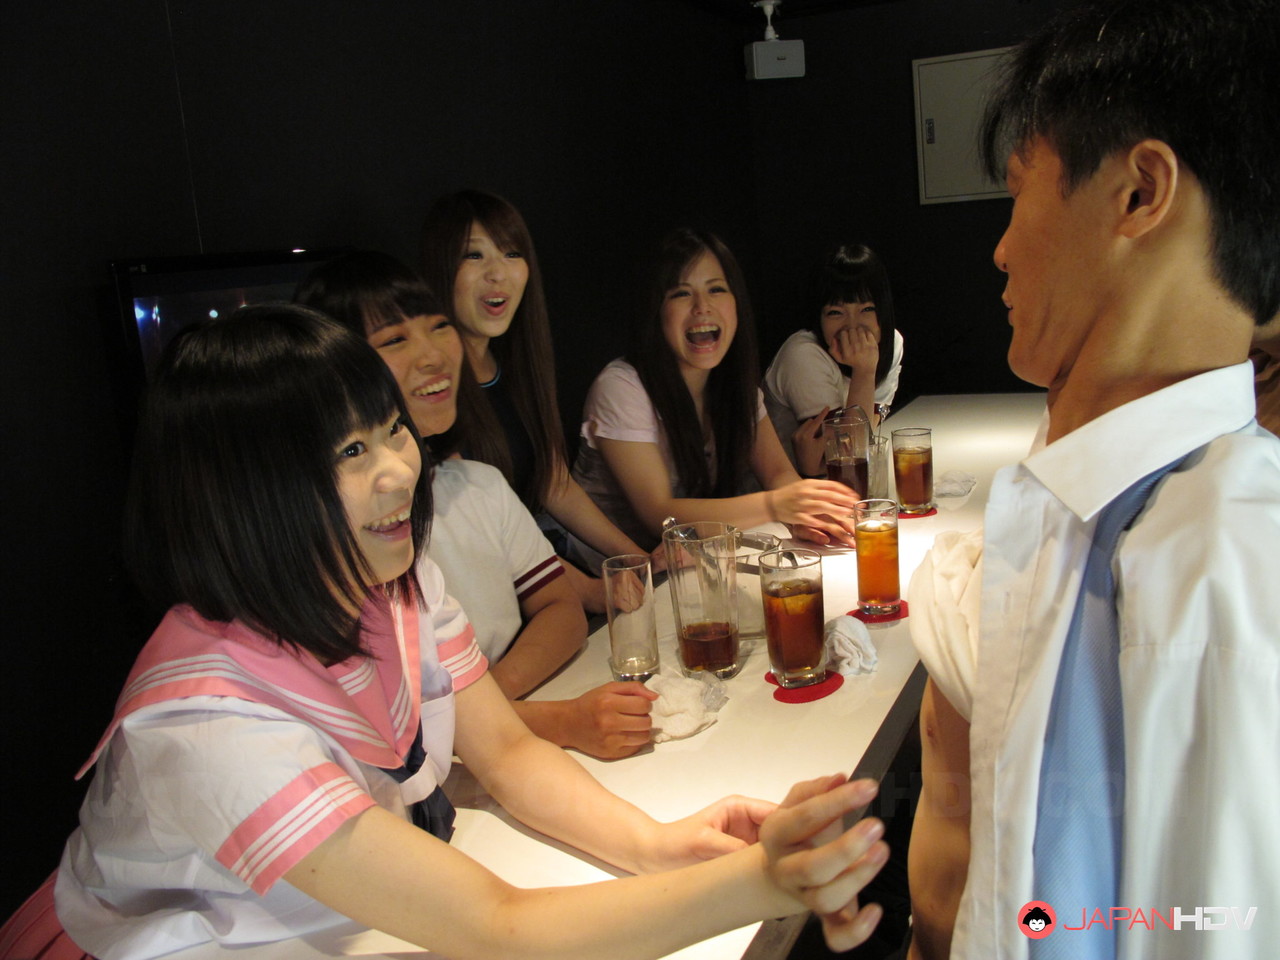 Asian cutie Mio Kosaki and her friends suck and jerk off dongs in a bar foto porno #426551978 | Japan HDV Pics, Mio Kosaki, Seiko Ida, Yuri Sakura, Japanese, porno mobile